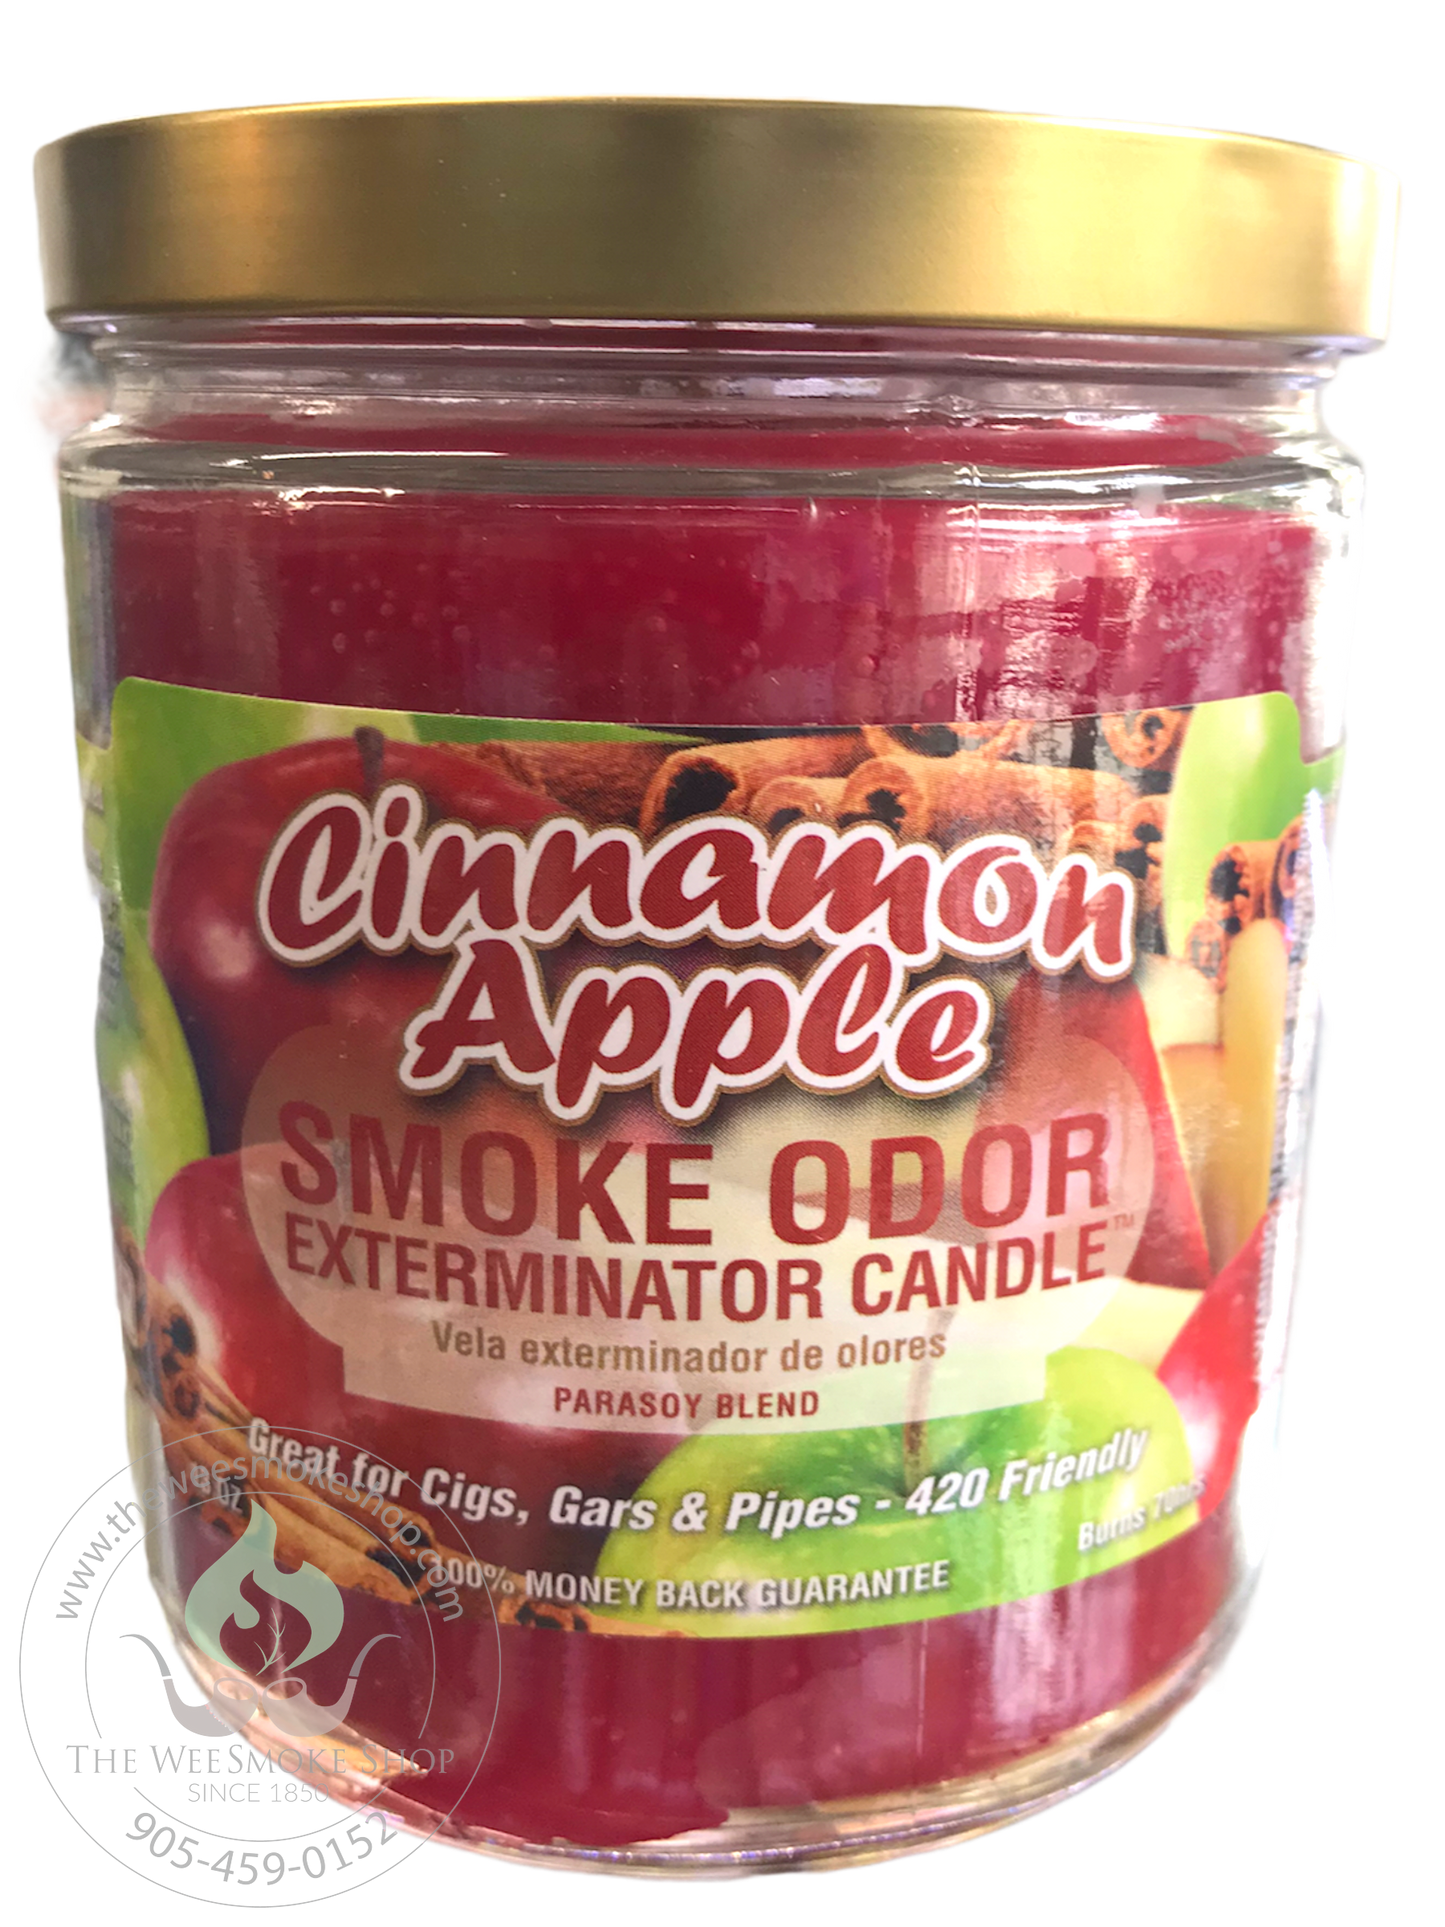 Cinnamon Apple Smoke Odor Exterminator Candle - Wee Smoke Shop